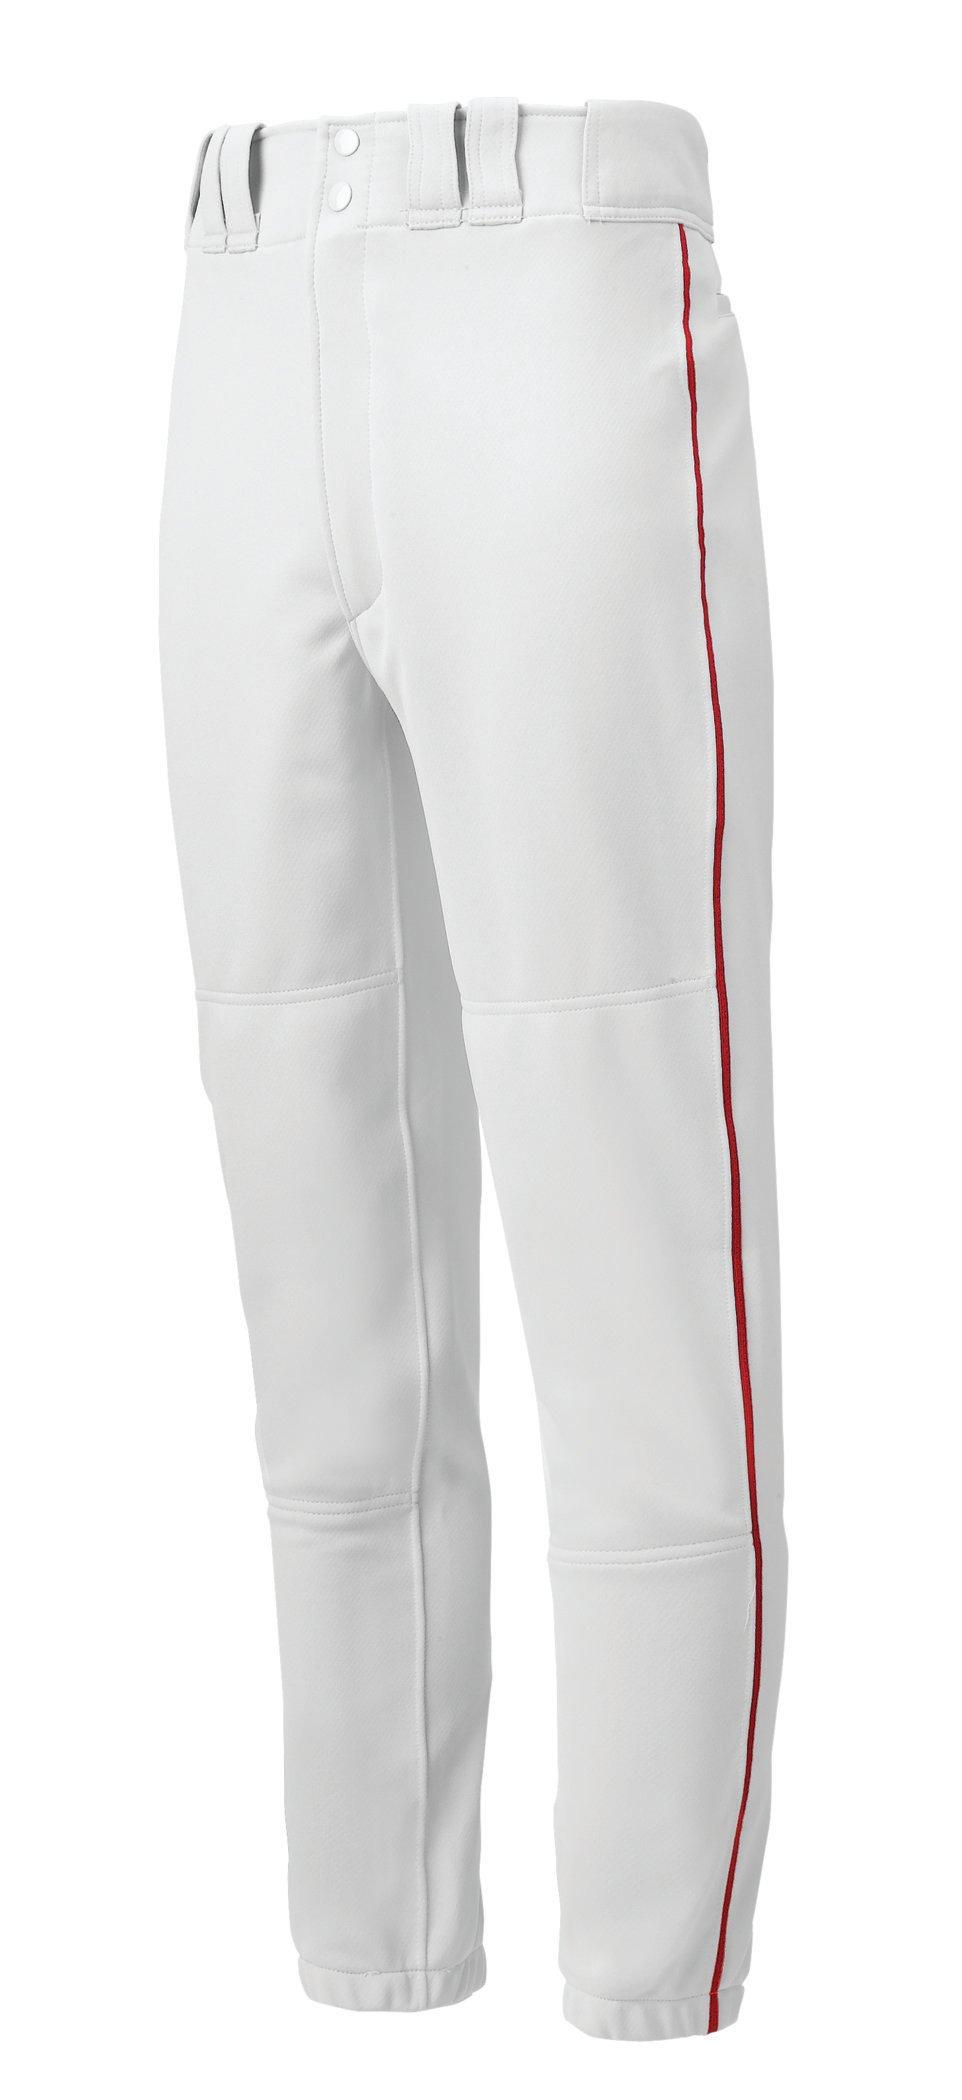 X-Small White-Royal Mizuno Adult Men's Premier Piped Short Baseball Pant 